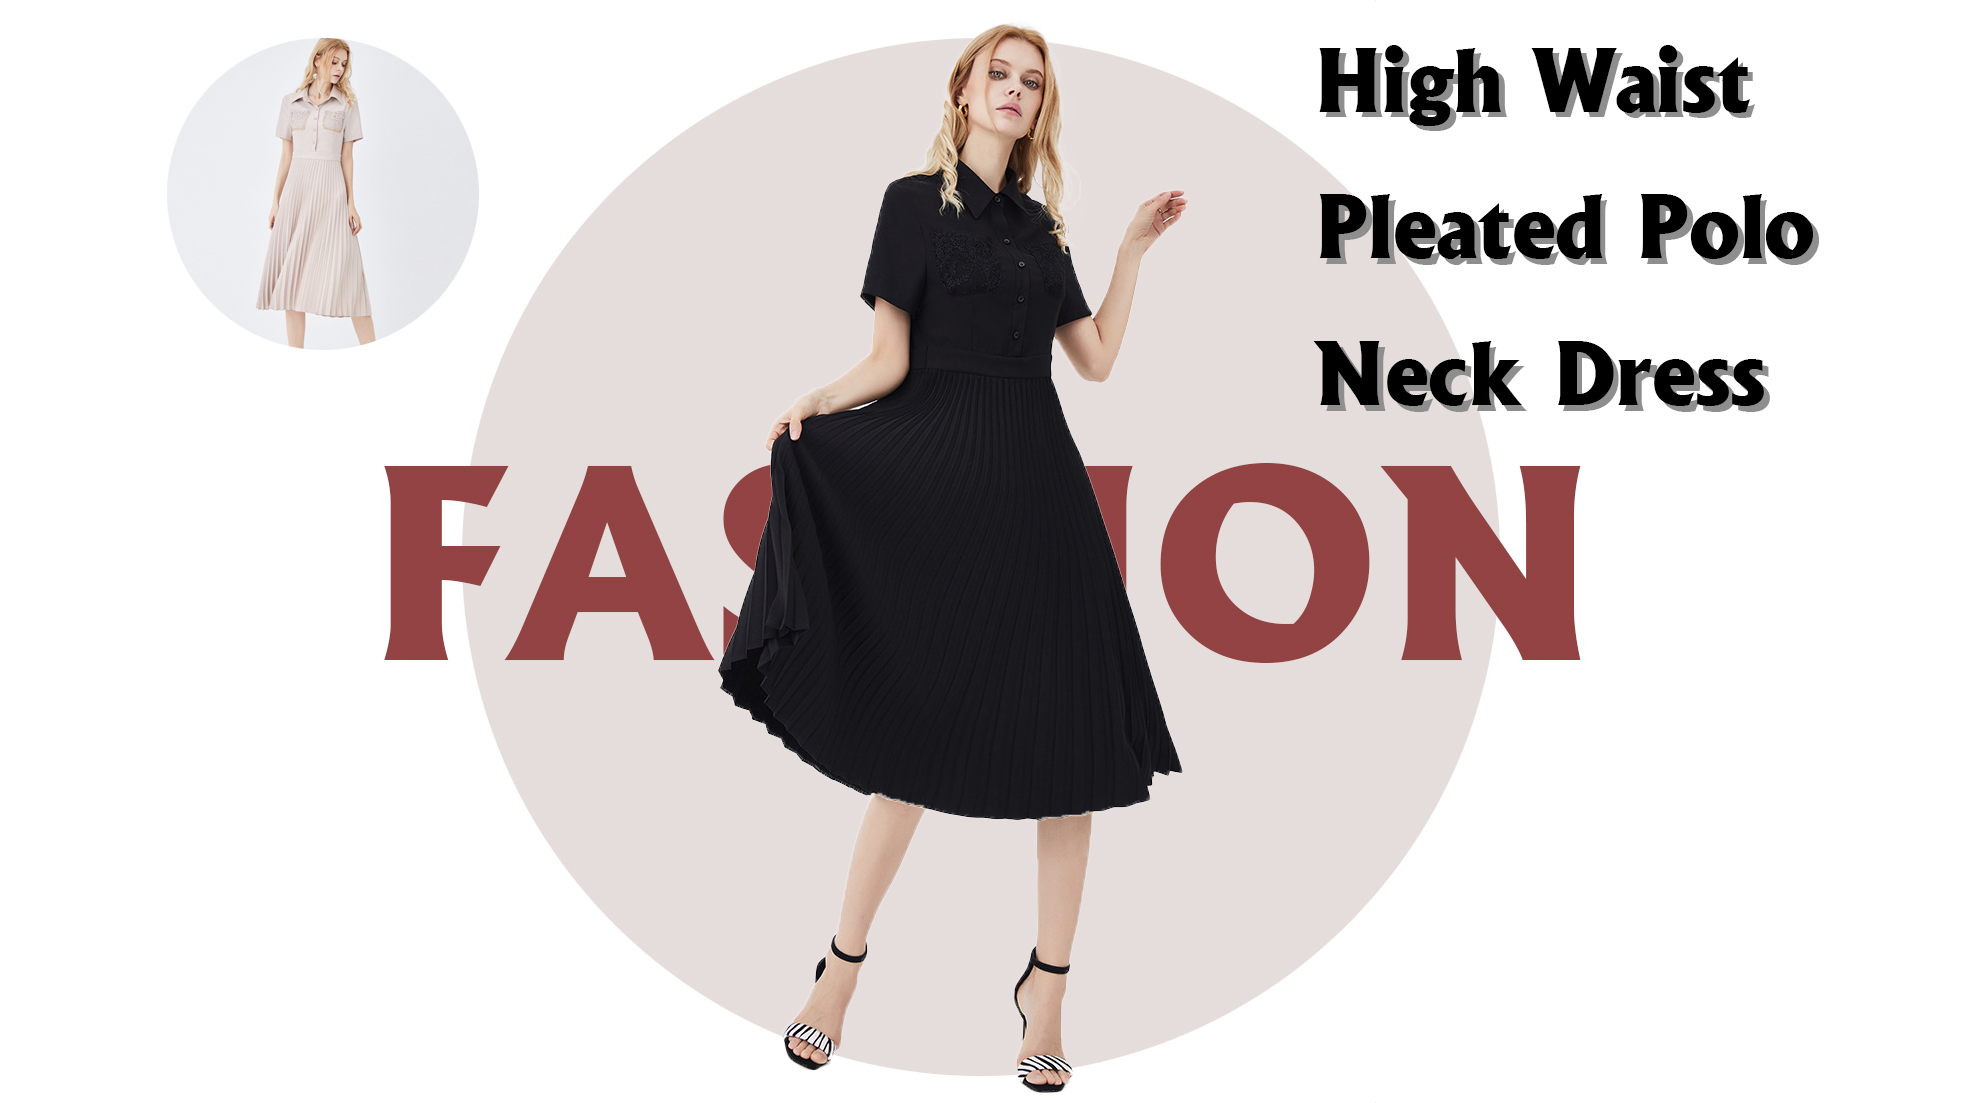 Customized High Waist Pleated Polo Neck Dress ຜູ້ຜະລິດຈາກປະເທດຈີນ |Auchalink